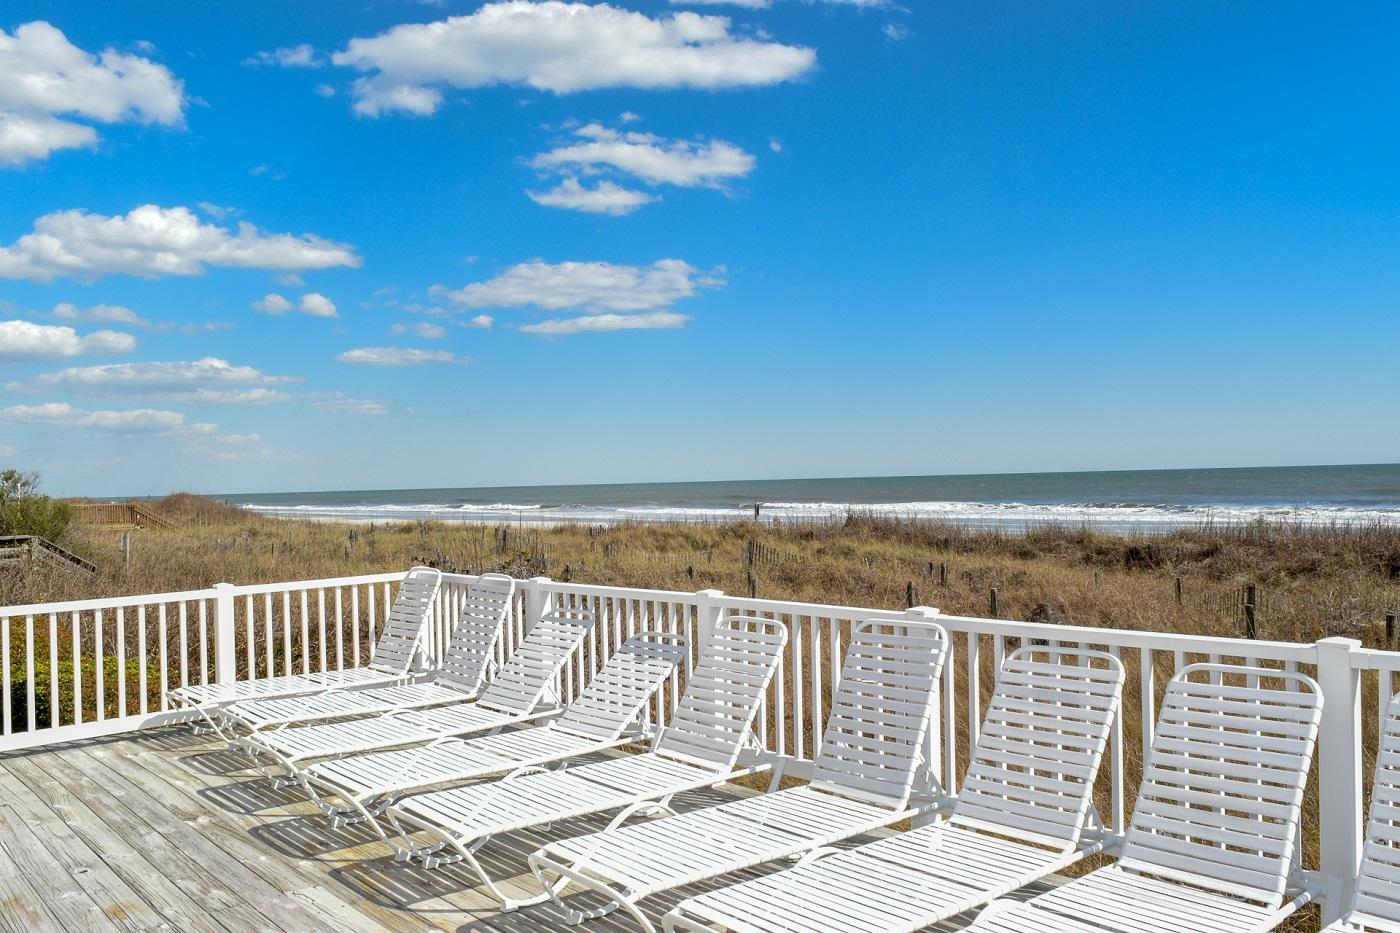  Beach Chair Rentals North Myrtle Beach South Carolina for Simple Design